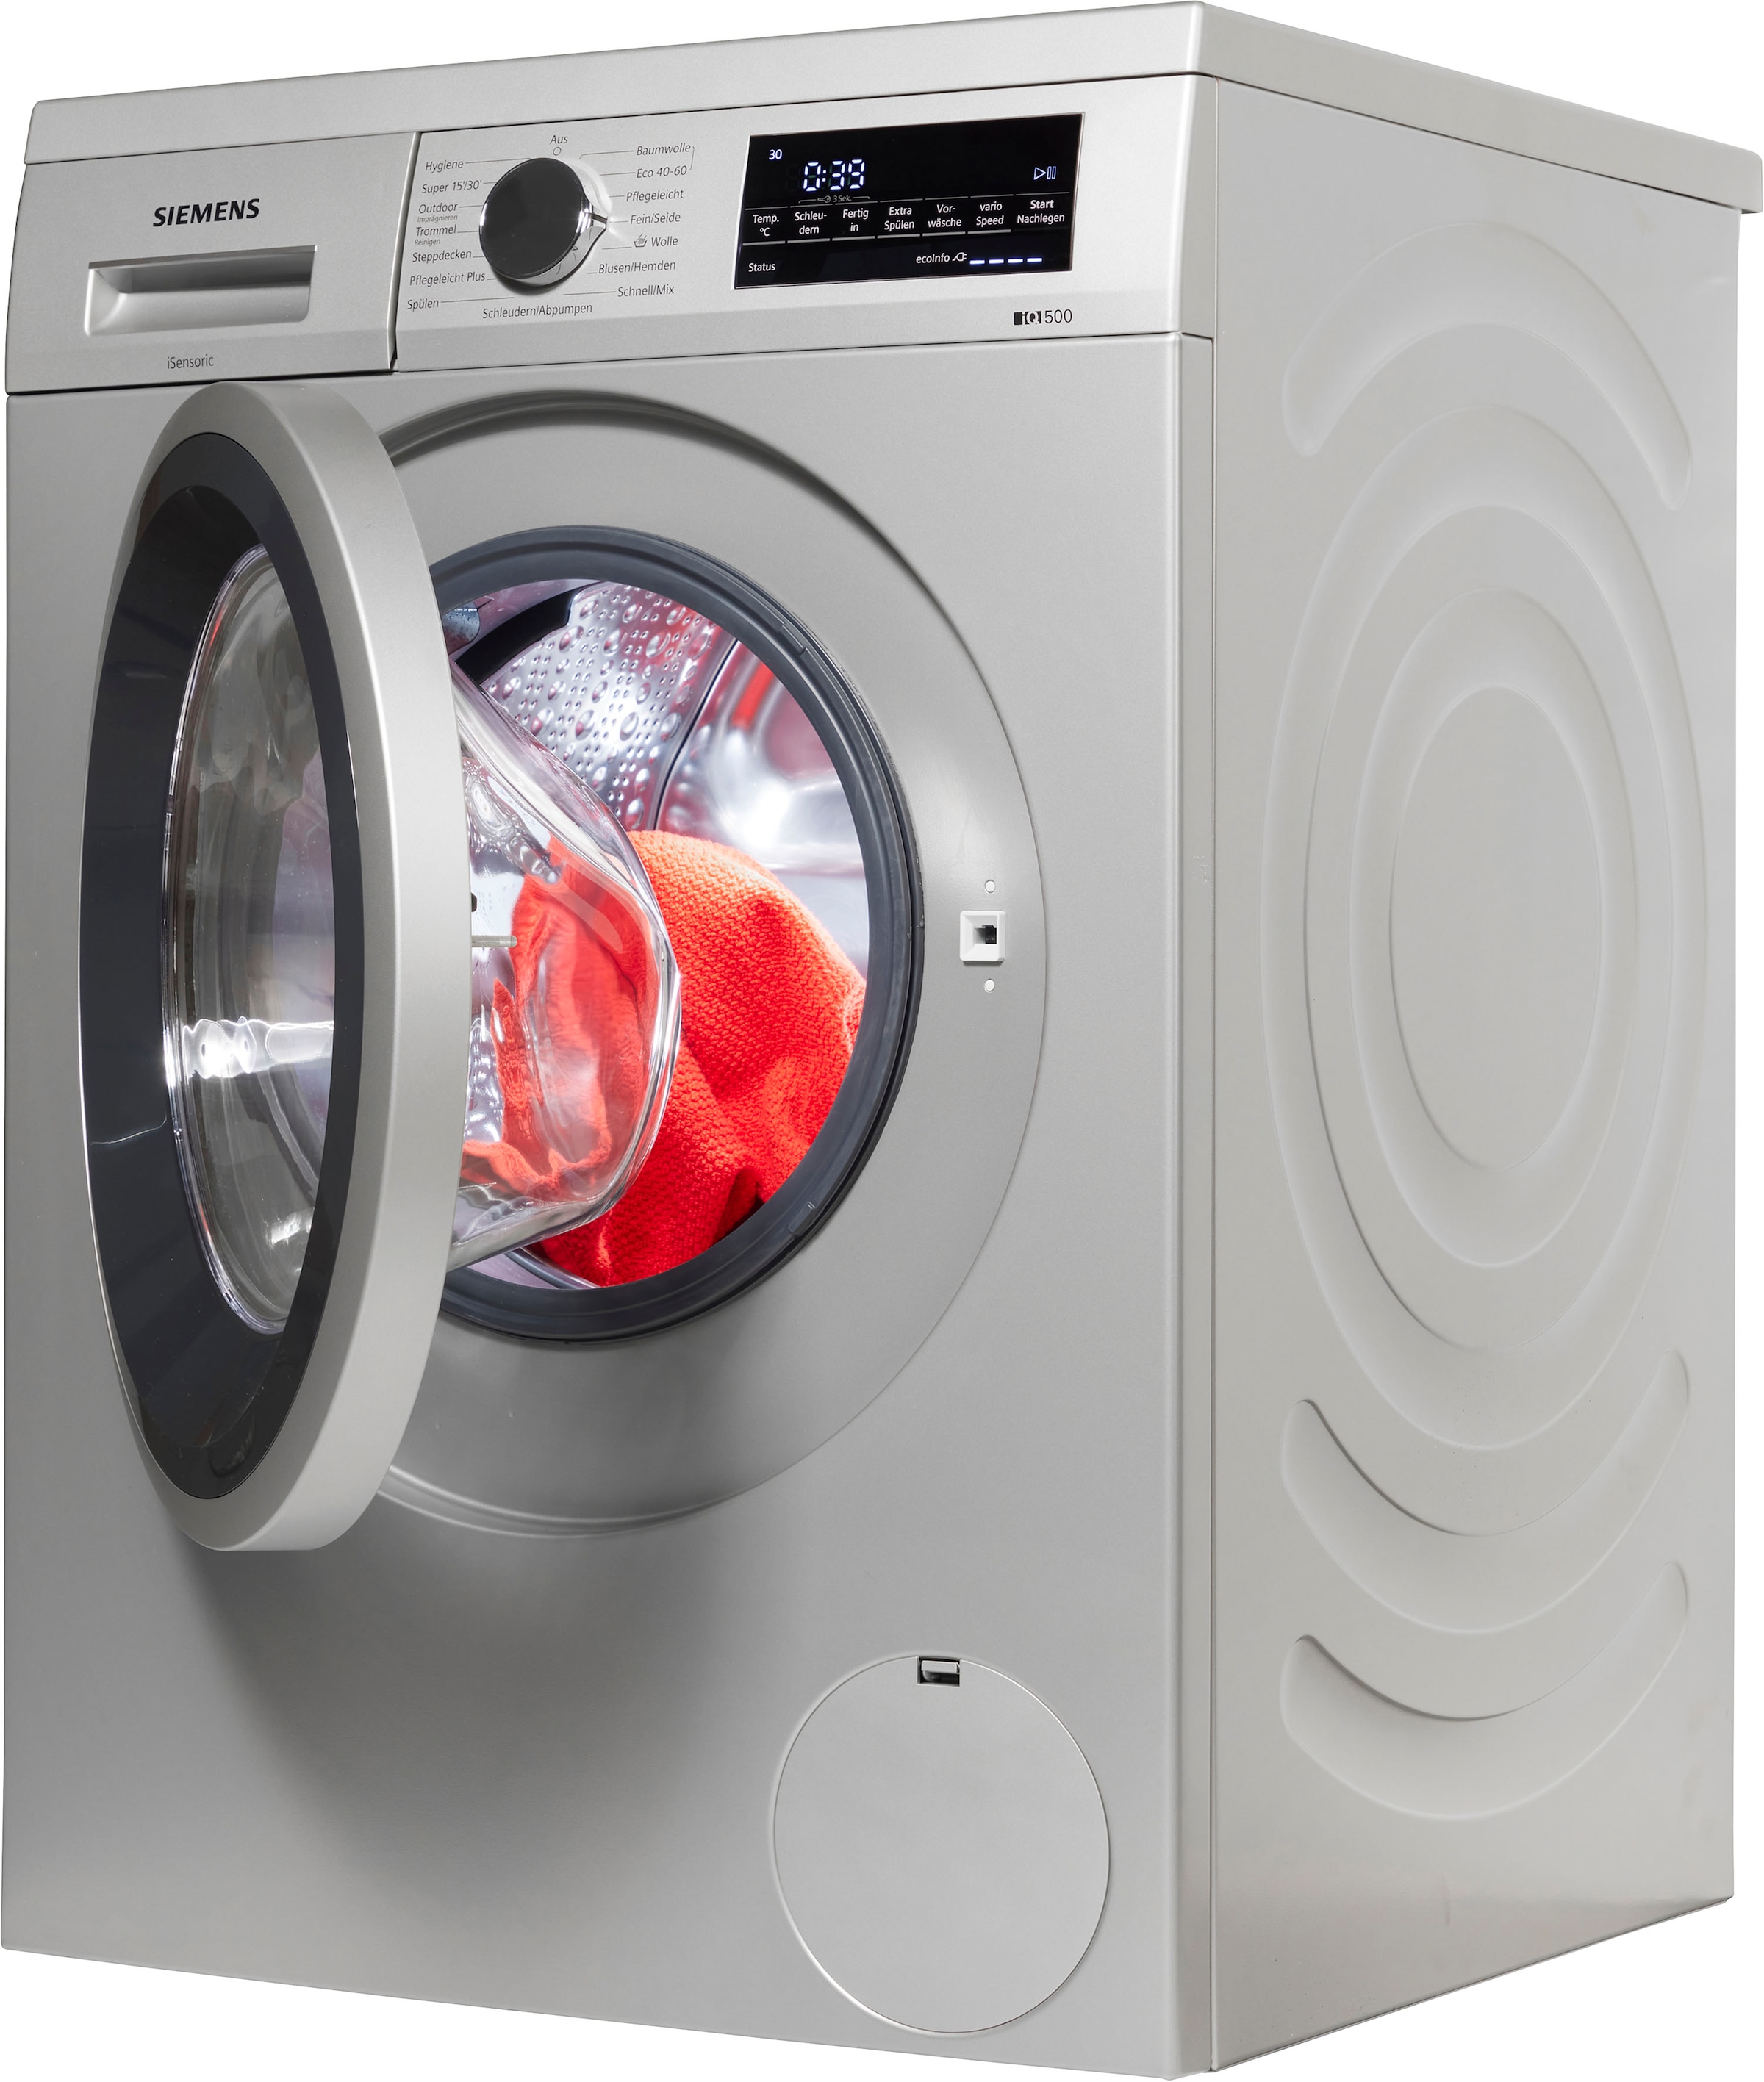 SIEMENS Waschmaschine Raten U/min BAUR auf »WU14UTS9«, kg, 9 1400 WU14UTS9, 